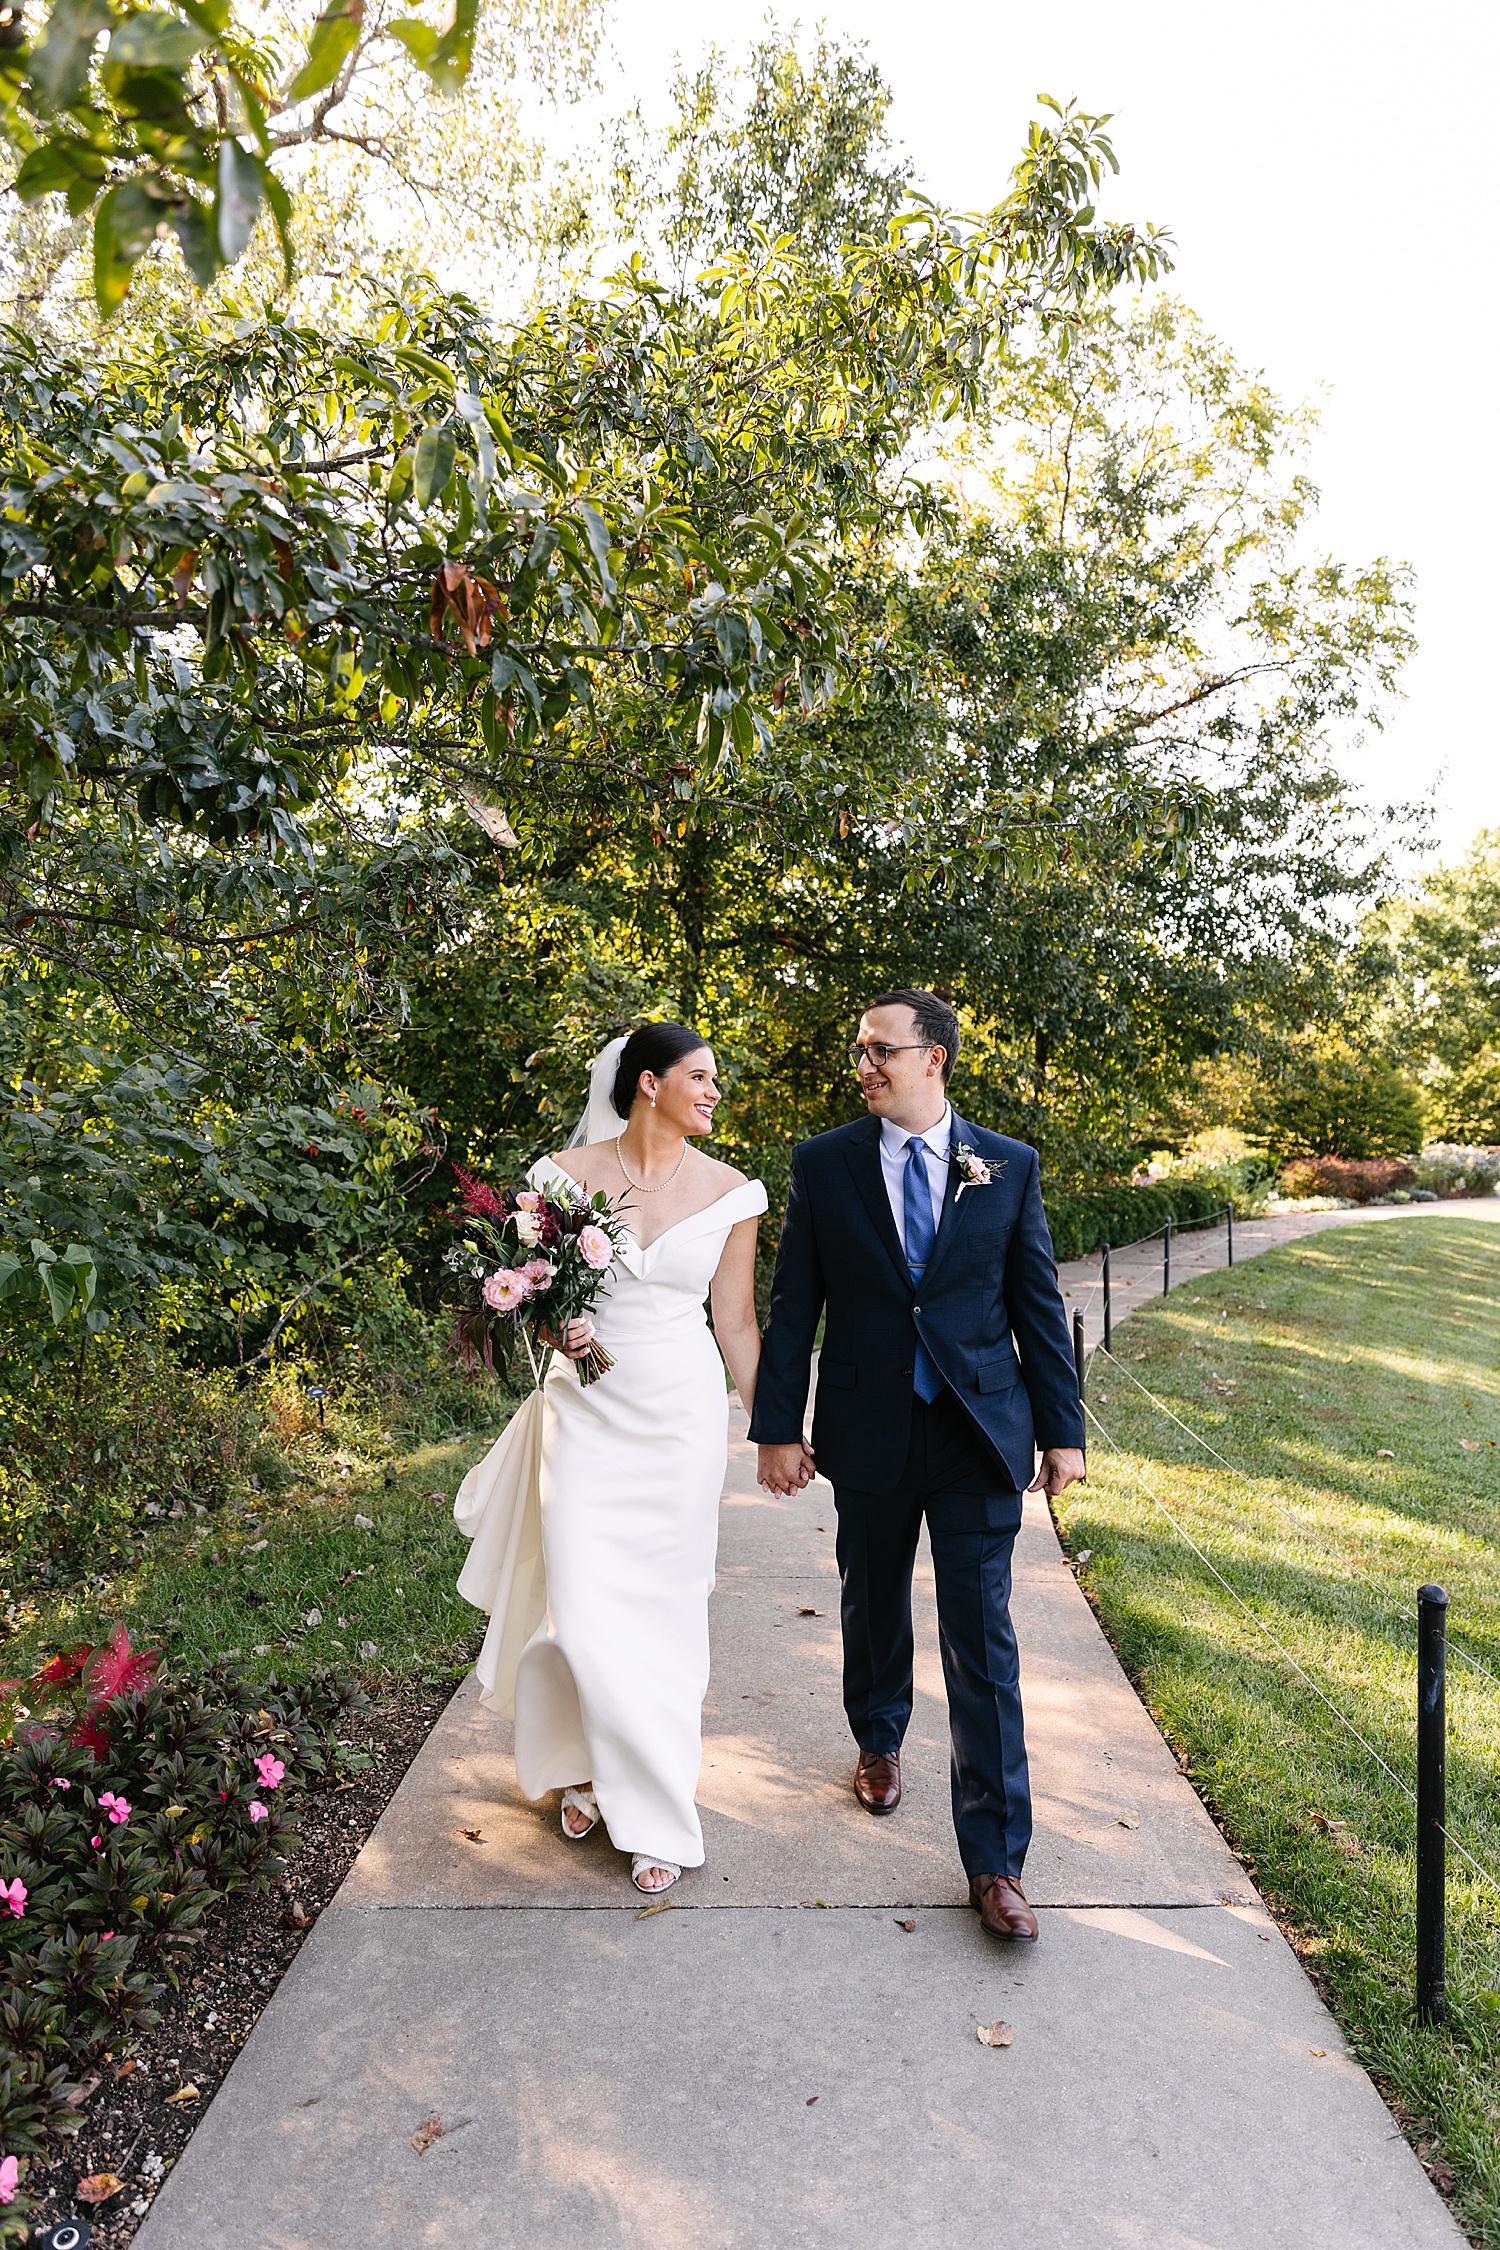 Bride and groom walk pathway at Overland Park Arboretum holding wedding bouquet